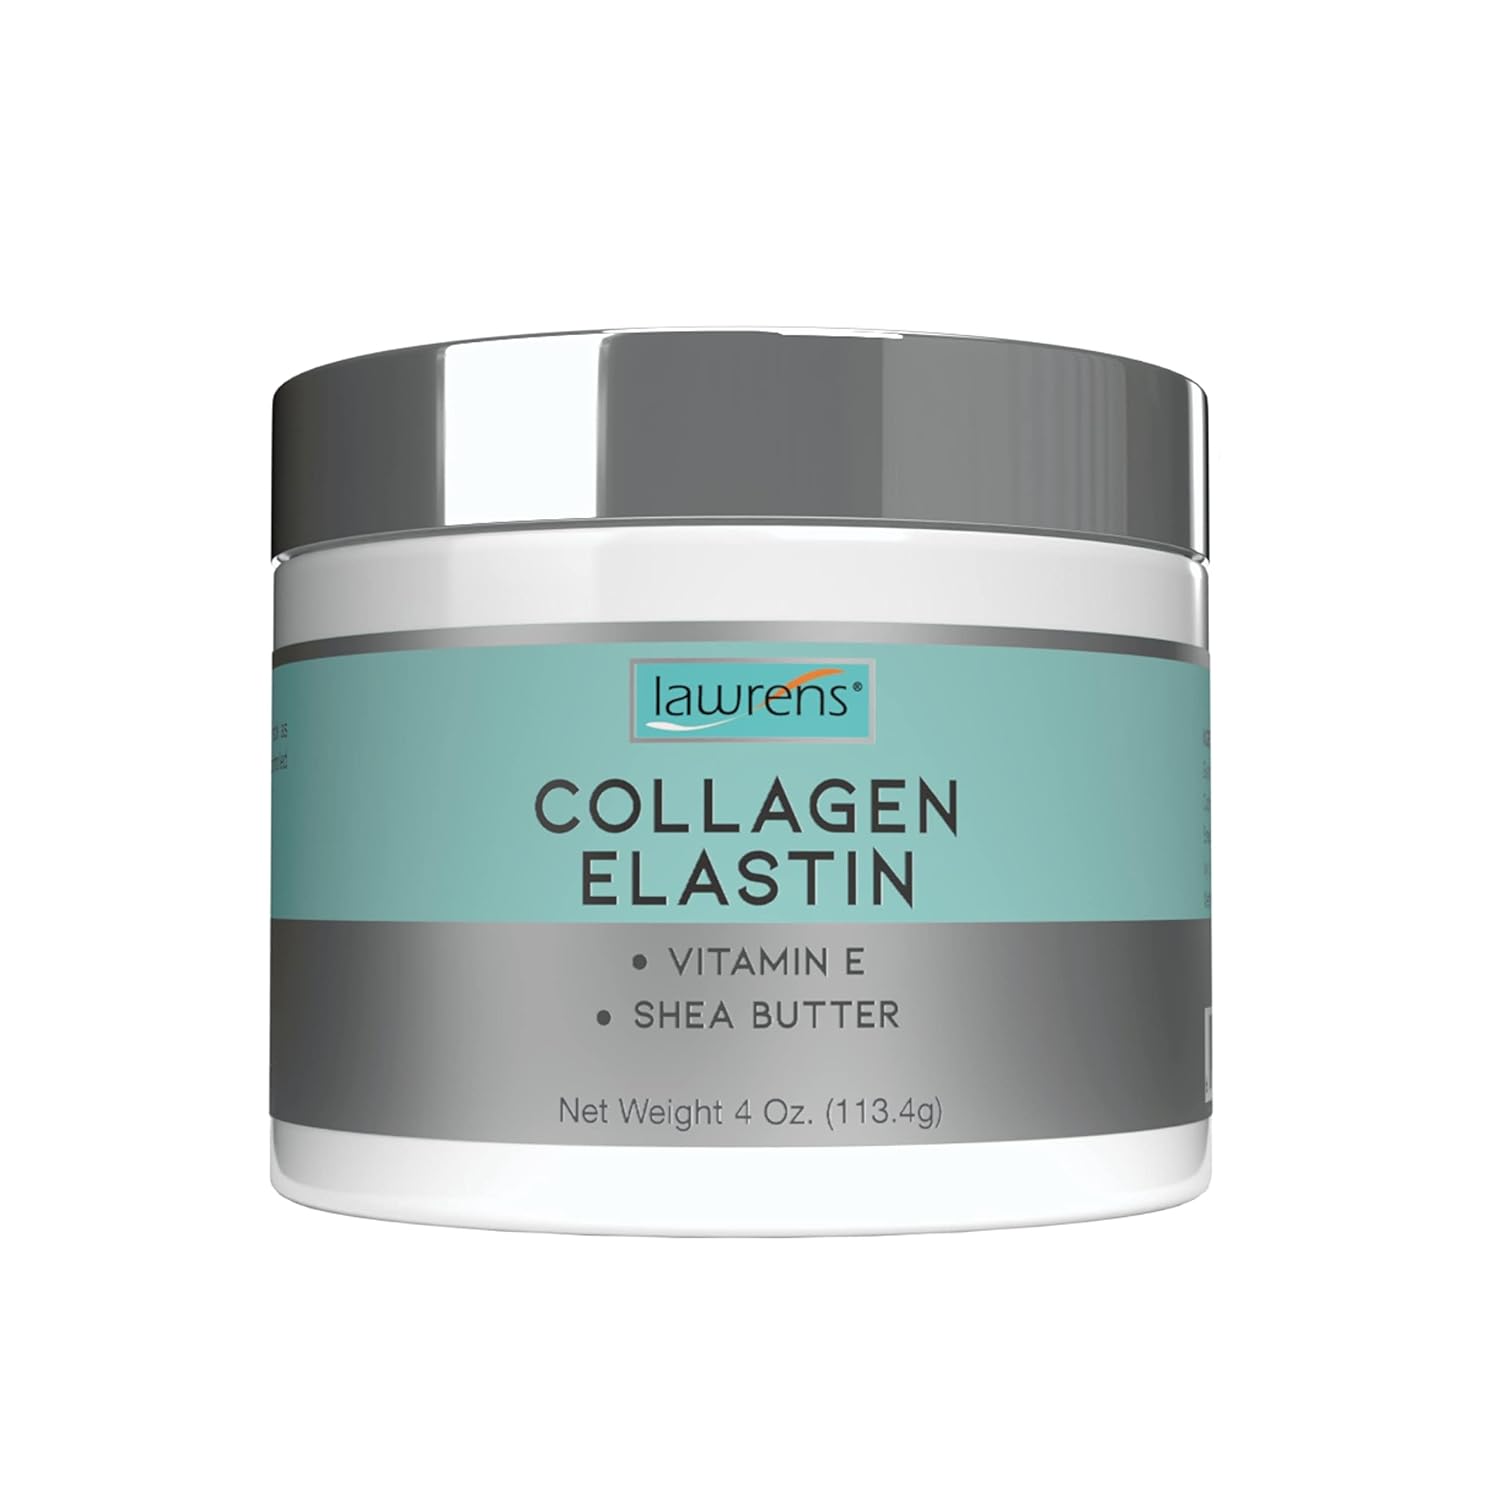 Lawrens Collagen Elastin Cream with Antioxidant Vitamin E & Shea Butter Cosmetics - Hydration - Firmness - Elasticity - 4